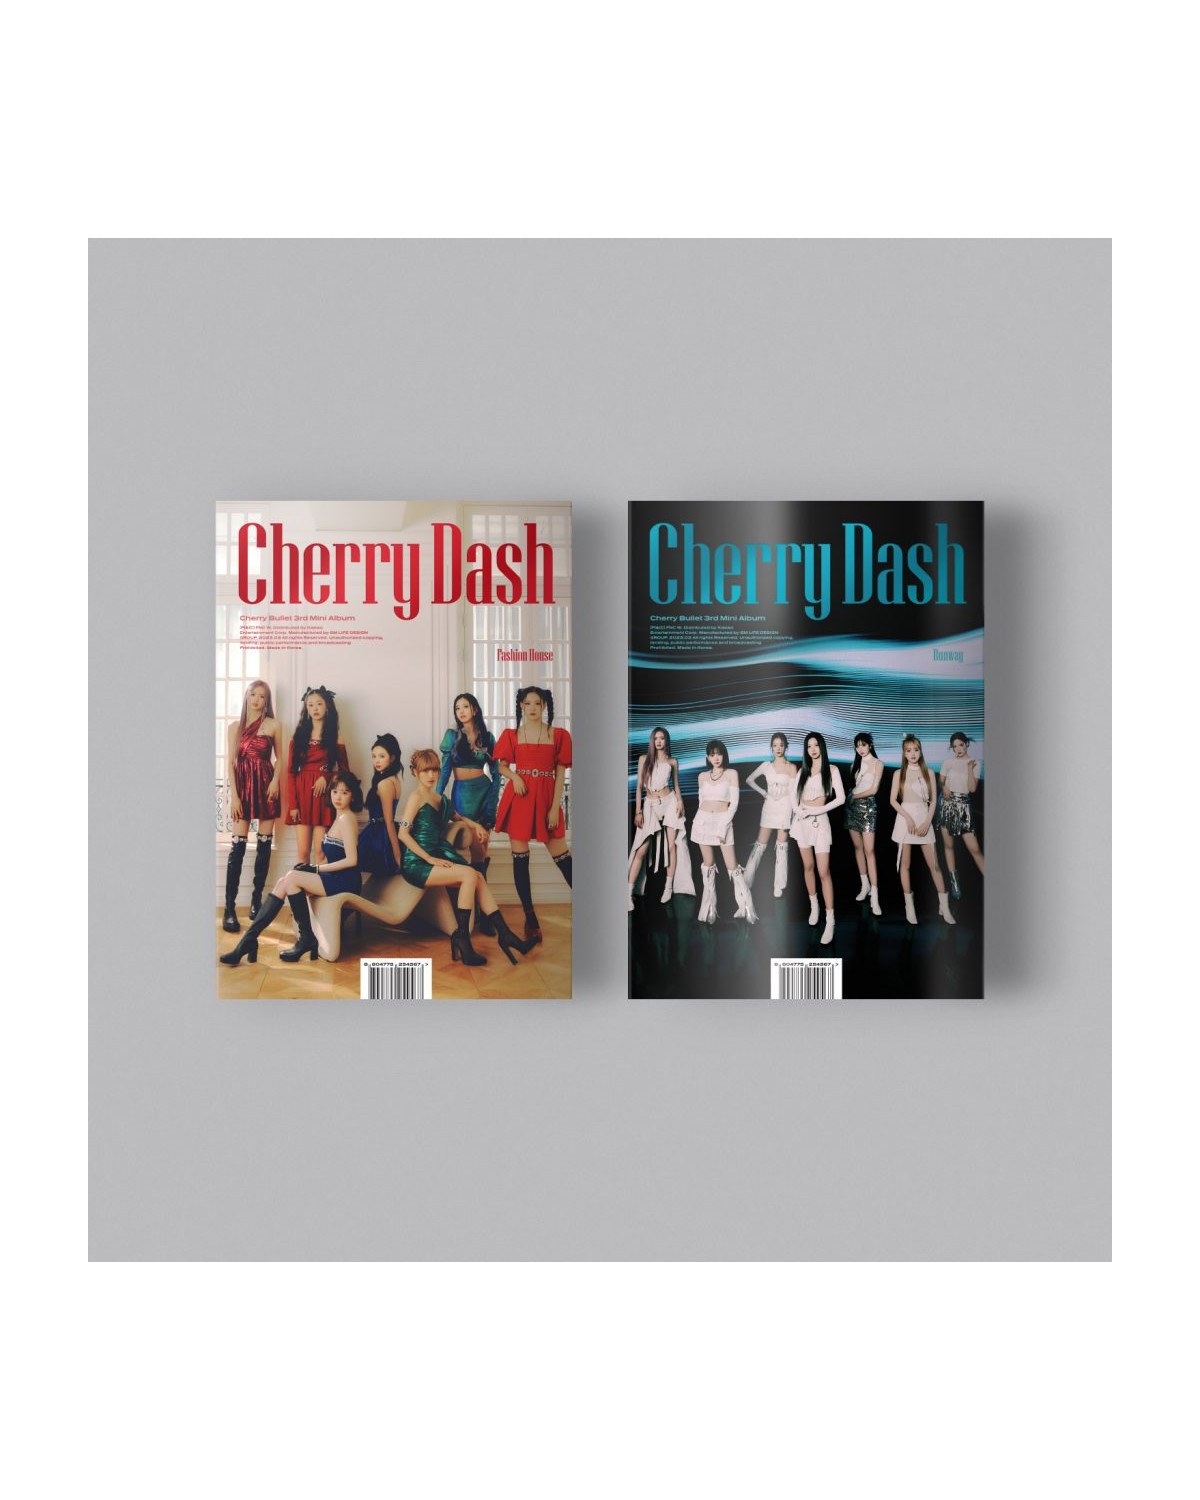 cherry bullet cherry dash album kpop